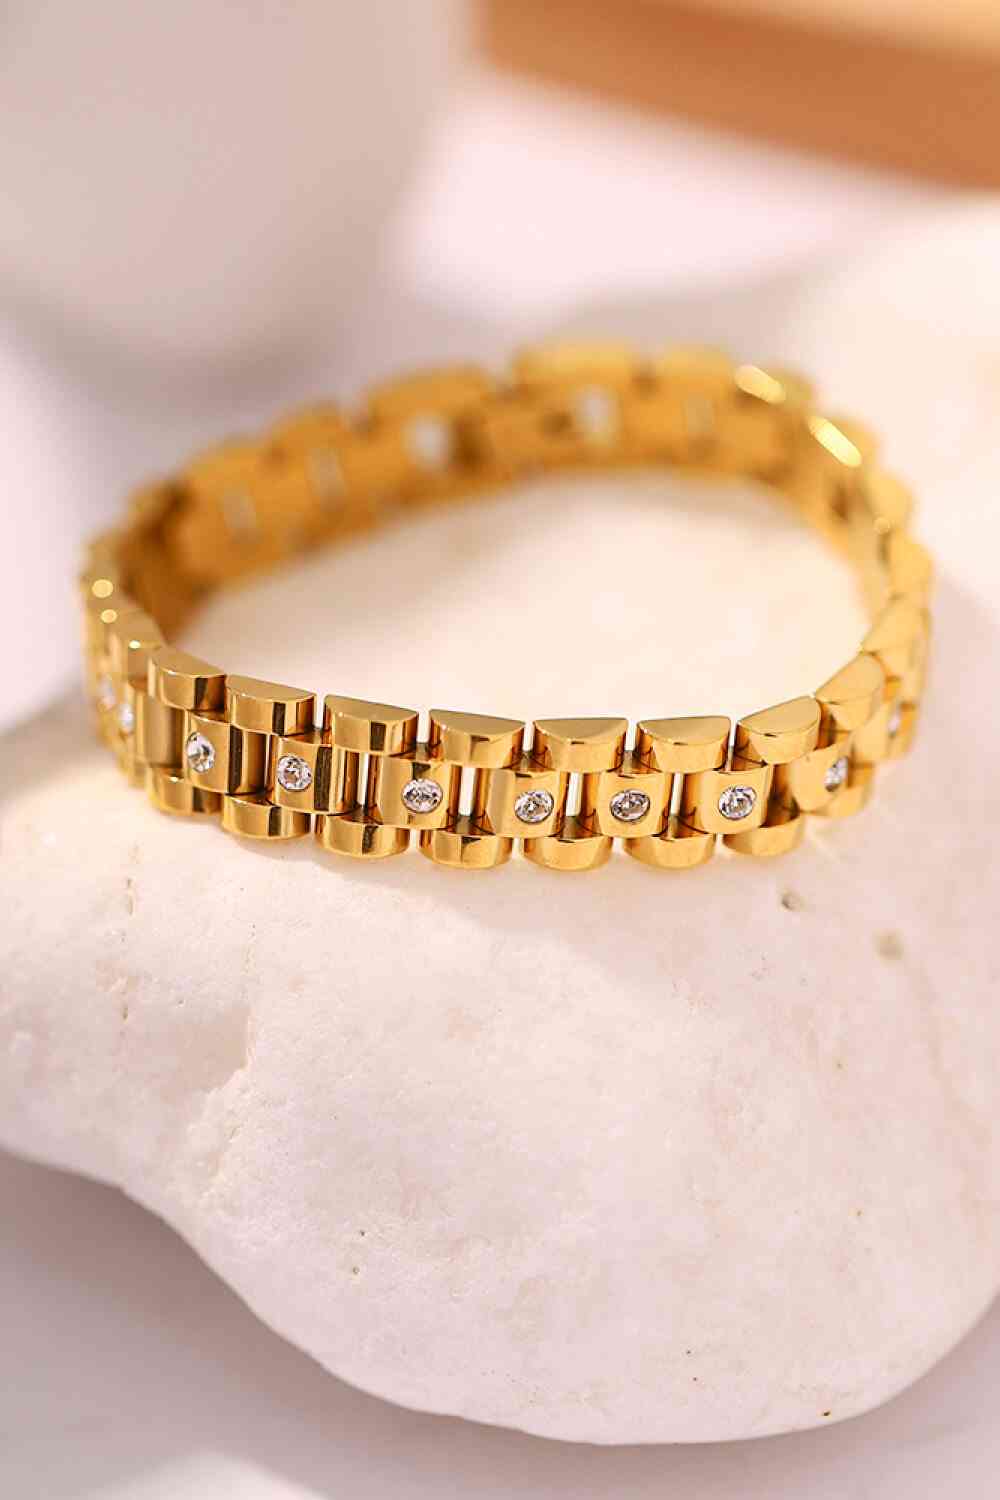 18K Gold-Plated Watch Band Bracelet - Pahabu